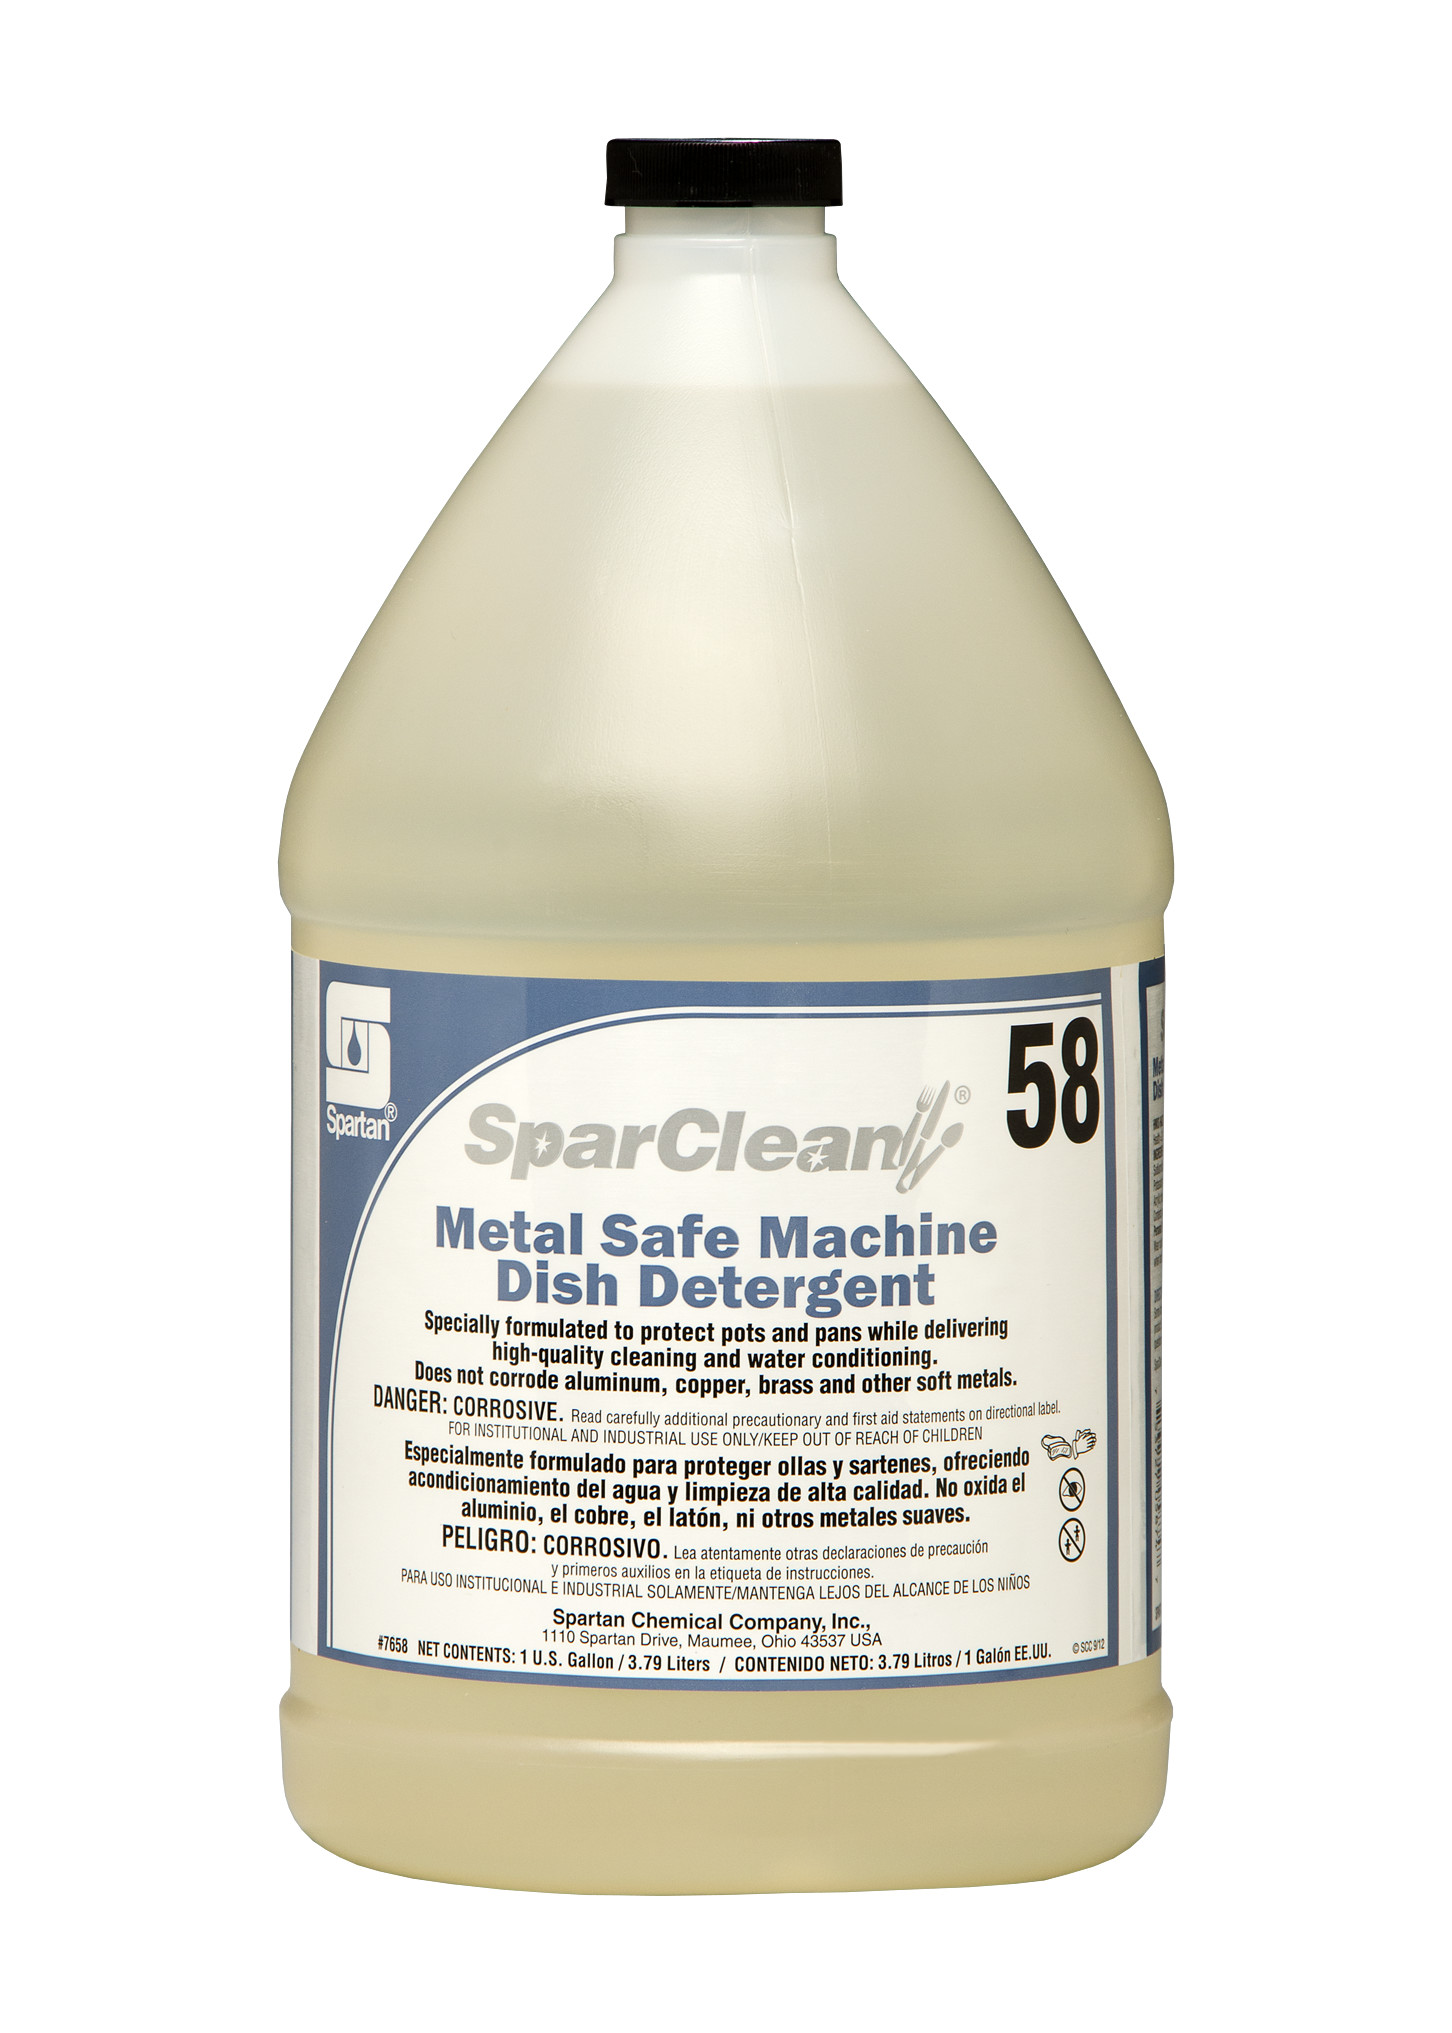 Spartan Chemical Company SparClean Metal Safe Machine Dish Detergent 58, 1 GAL 4/CSE